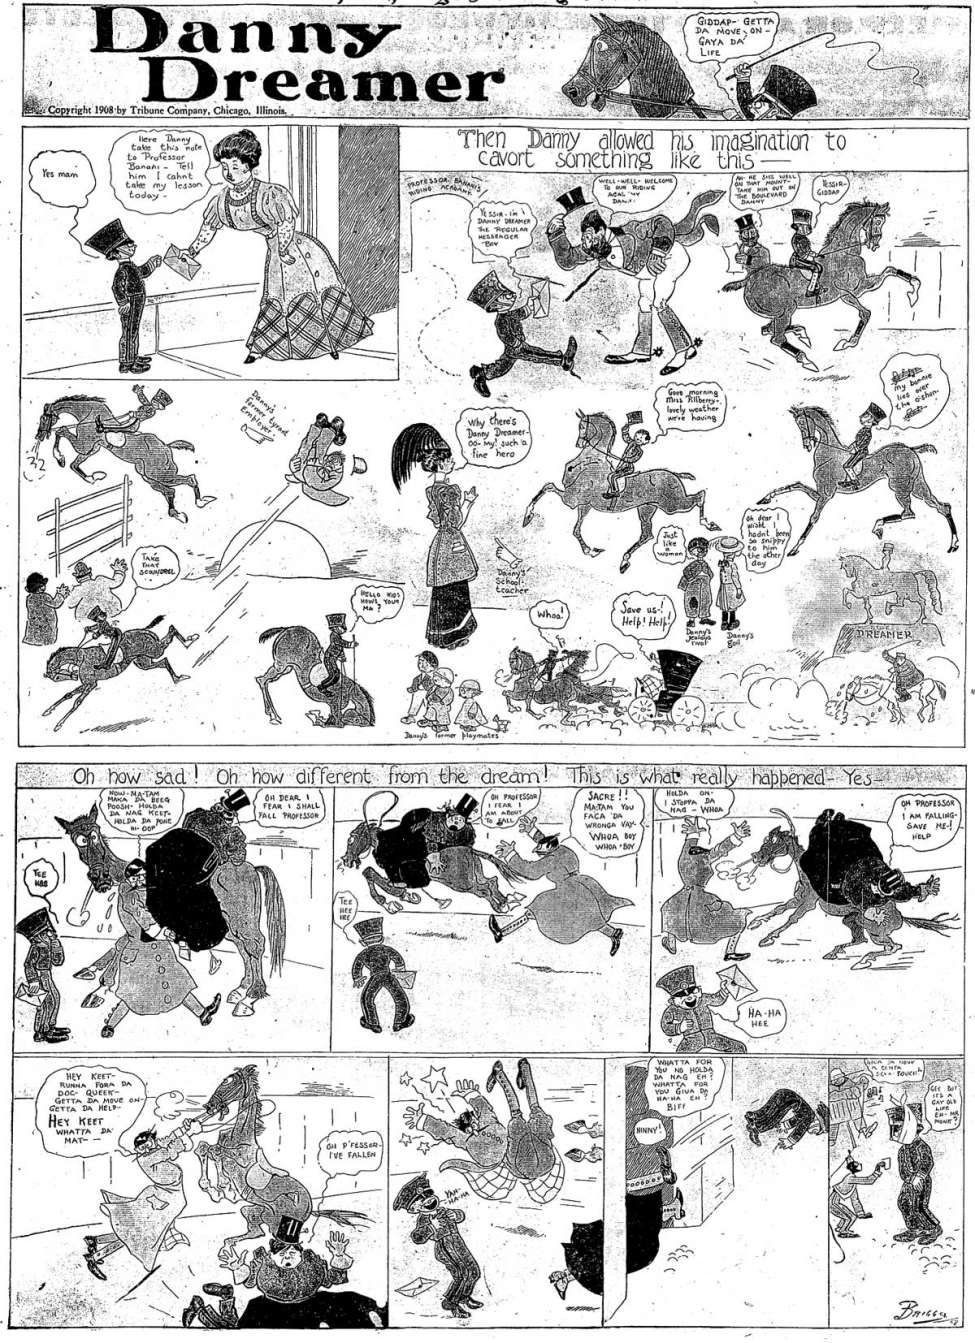 Comic Book Cover For Danny Dreamer 1908